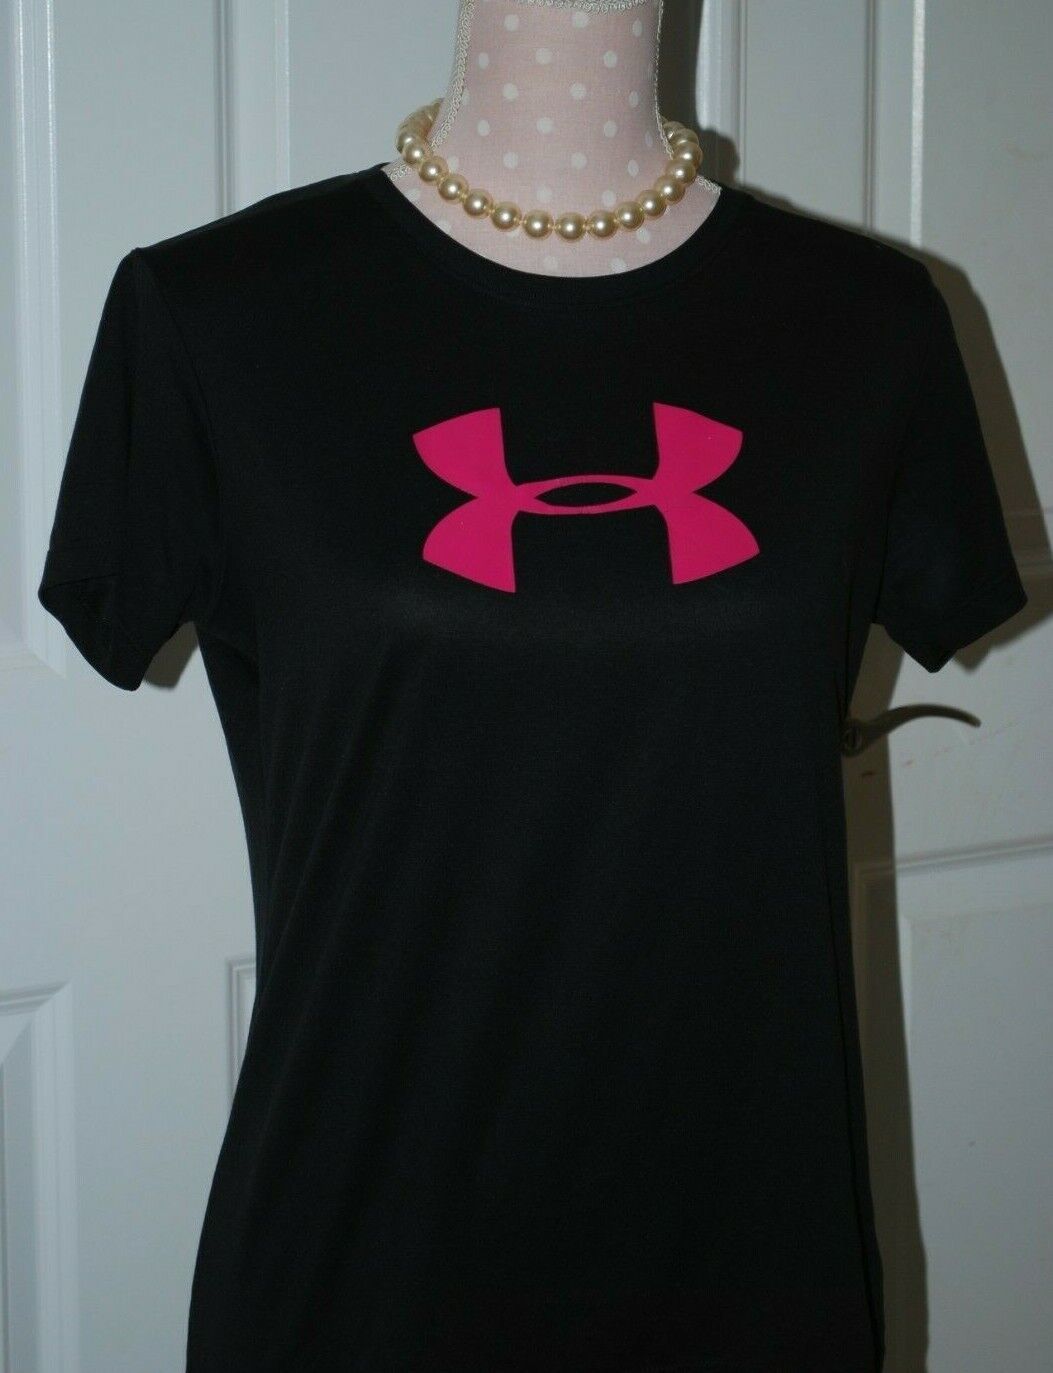 youth YXL UNDER ARMOUR t-shirt tee loose Black Pink Logo - $9.99